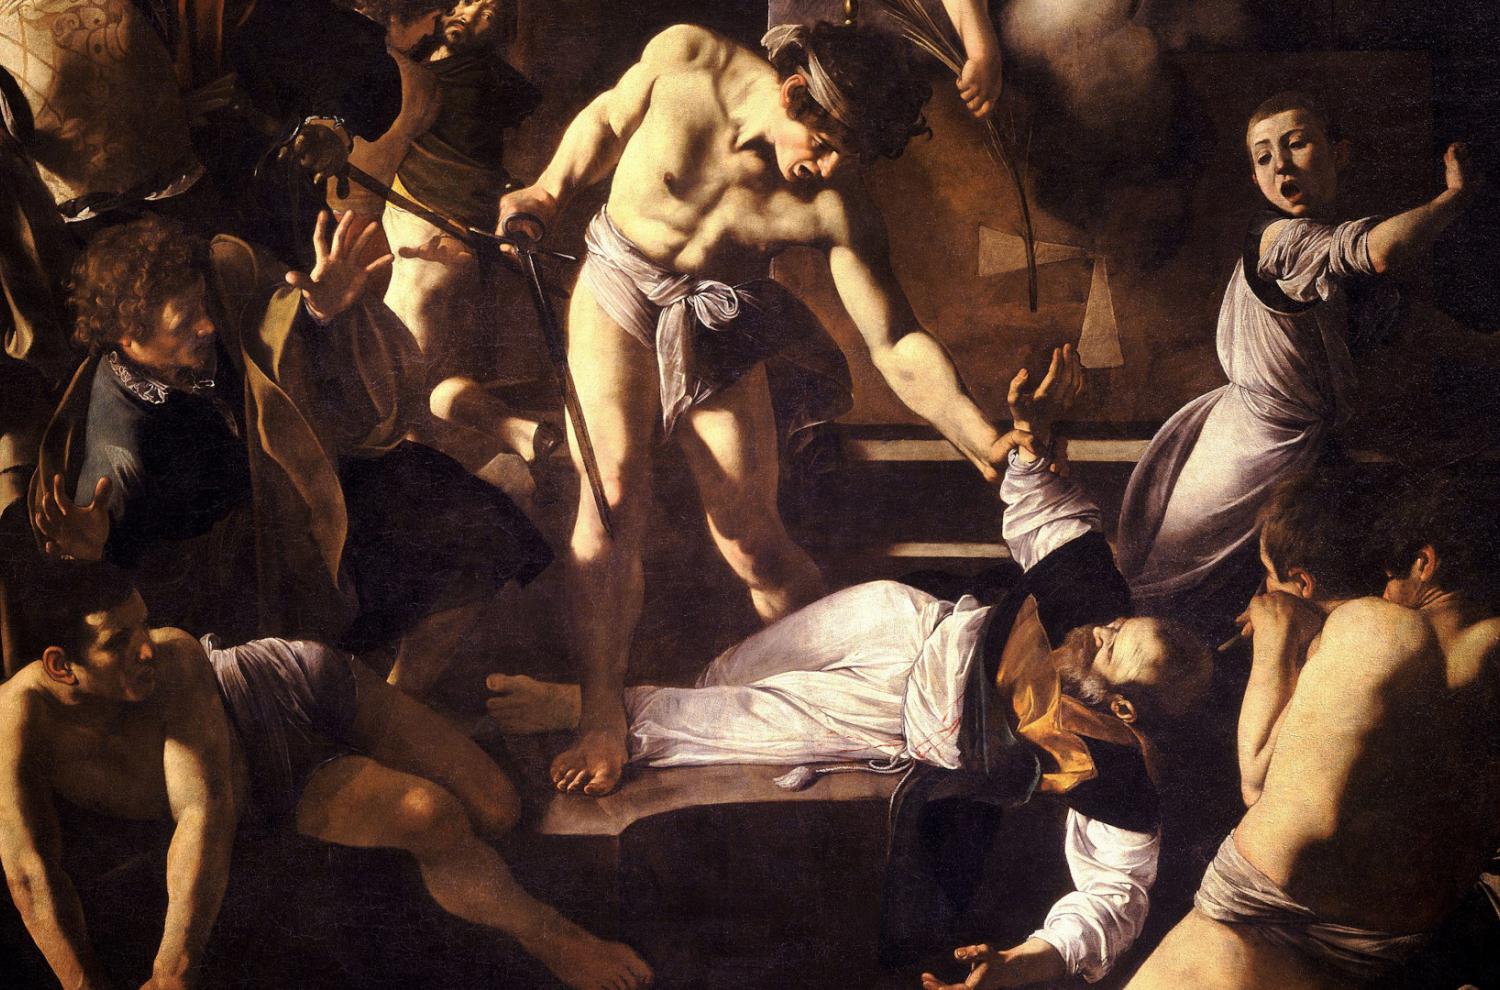 Detail from “The Martyrdom of Saint Matthew” by Michelangelo Merisi da Caravaggio. Public Domain Image